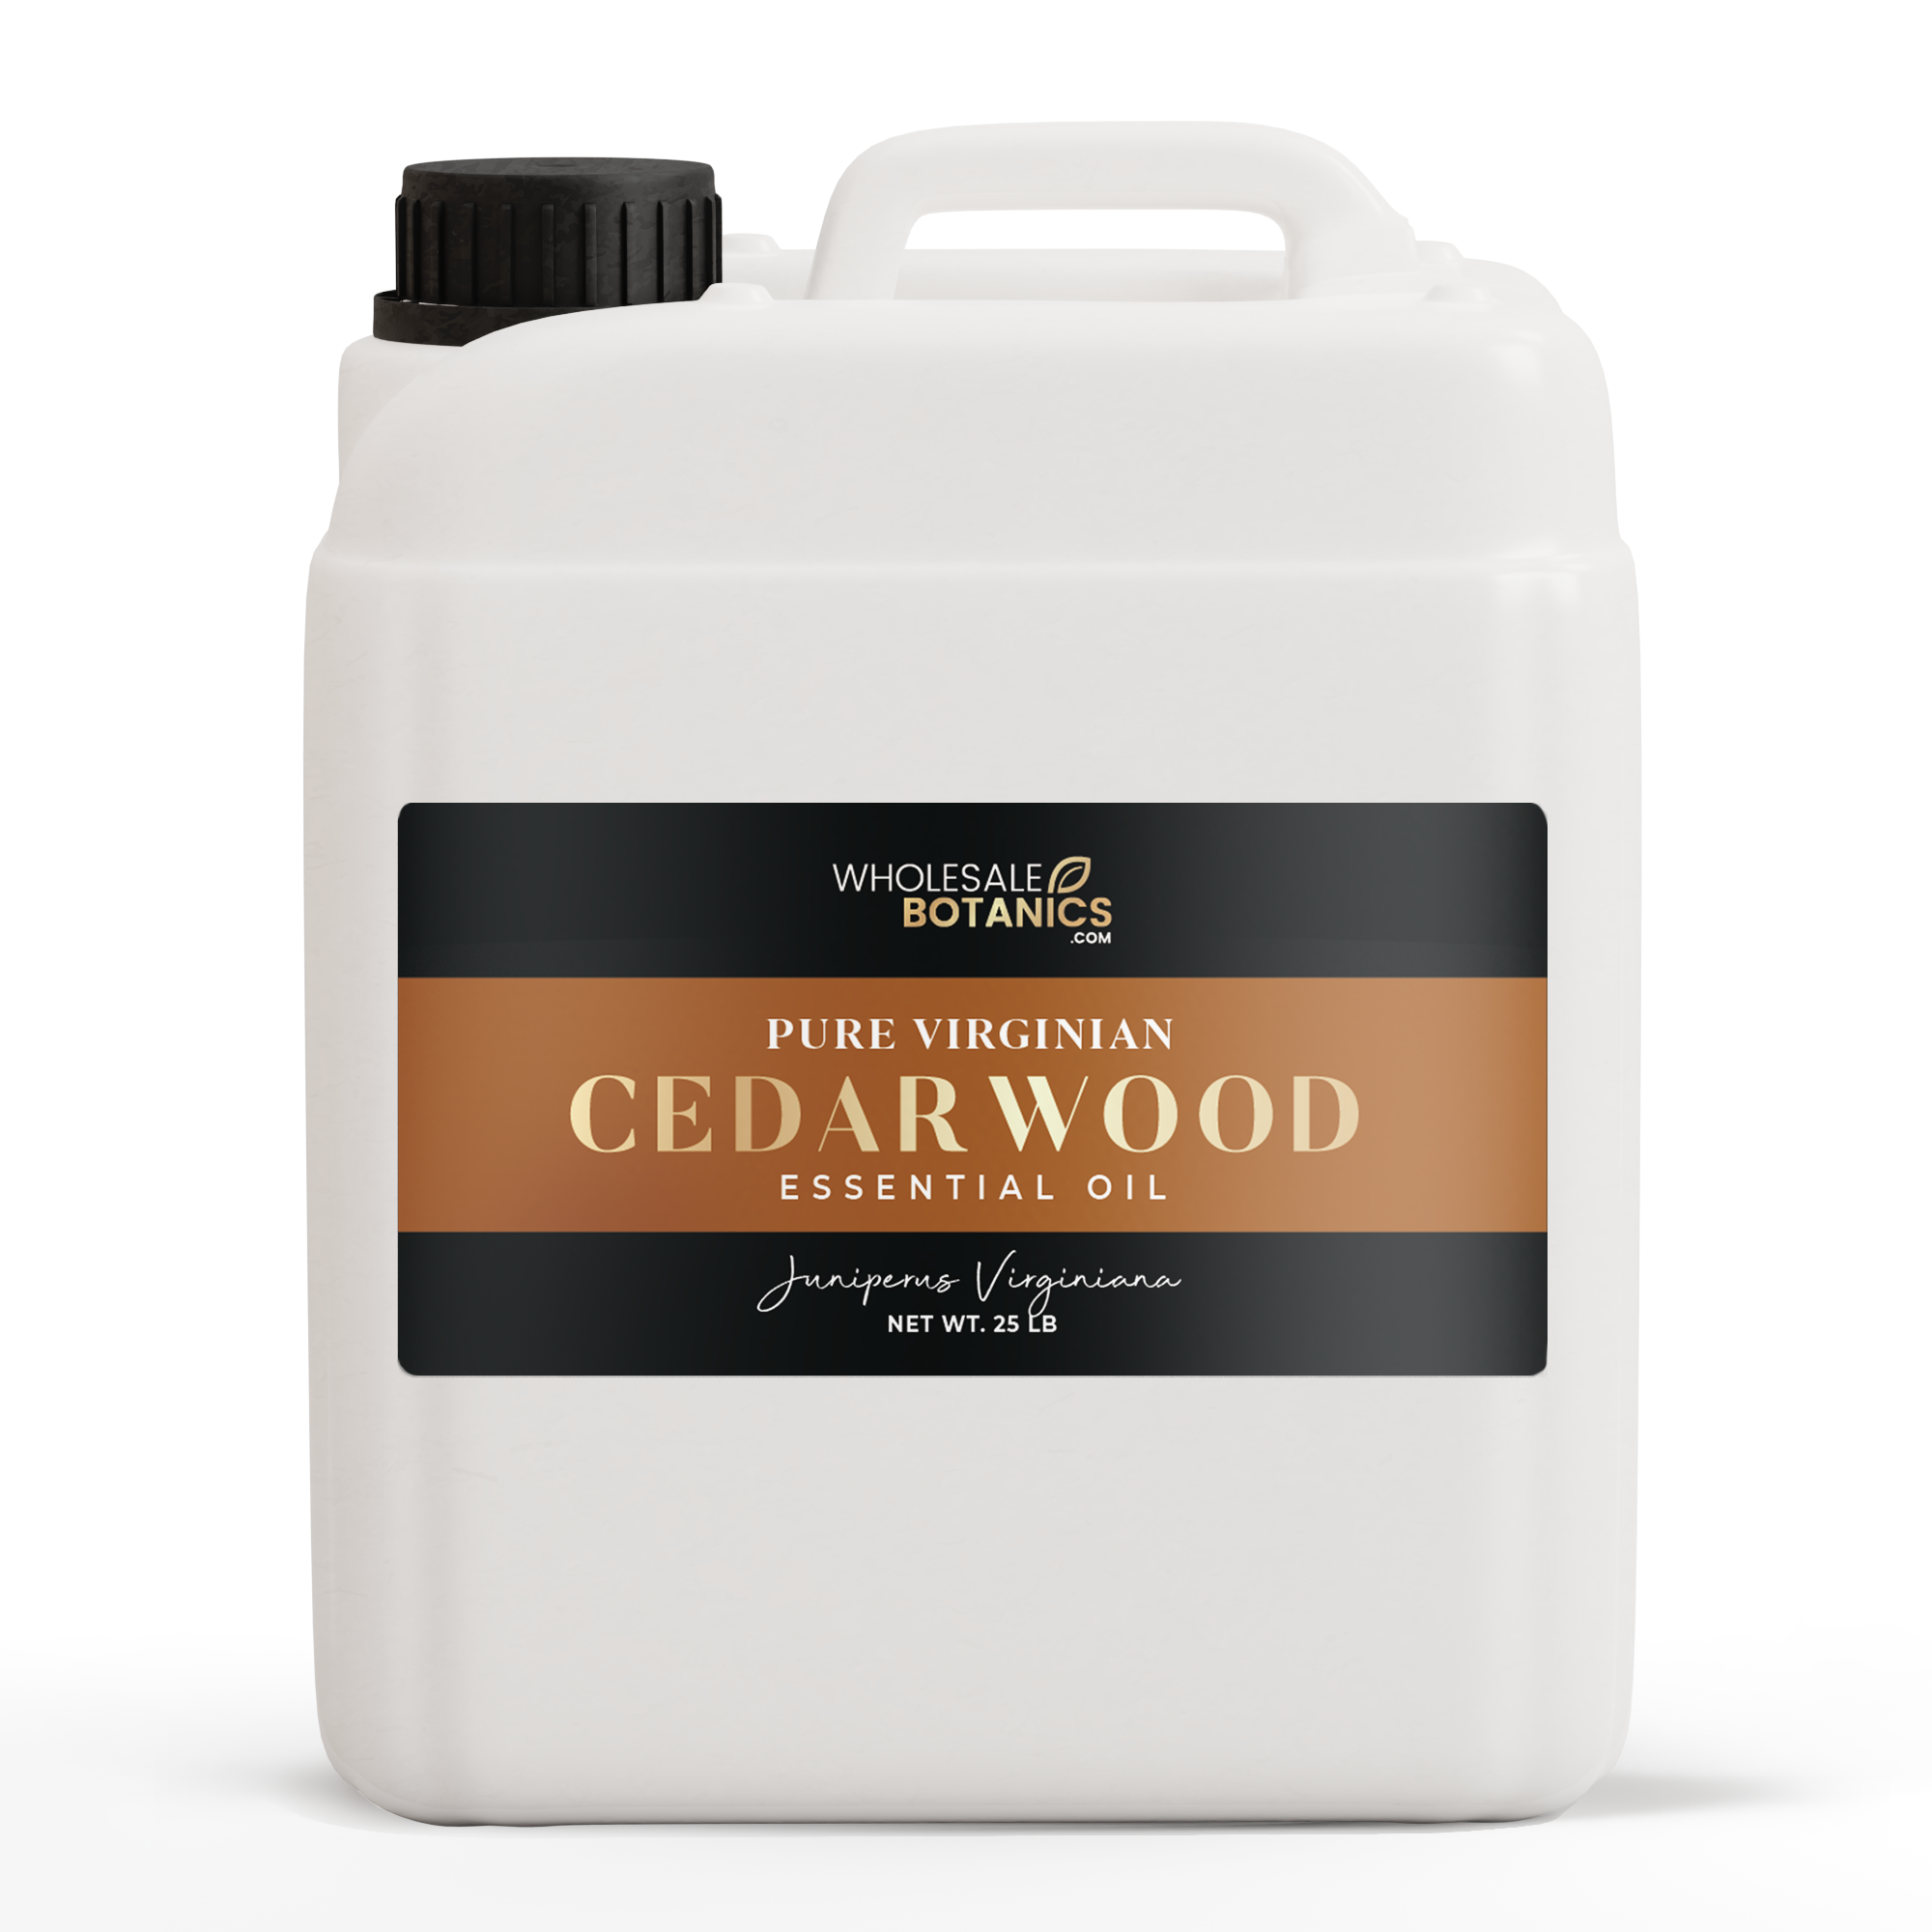 Cedarwood Essential Oil - Purity Virginian Cedarwood - 25 lbs